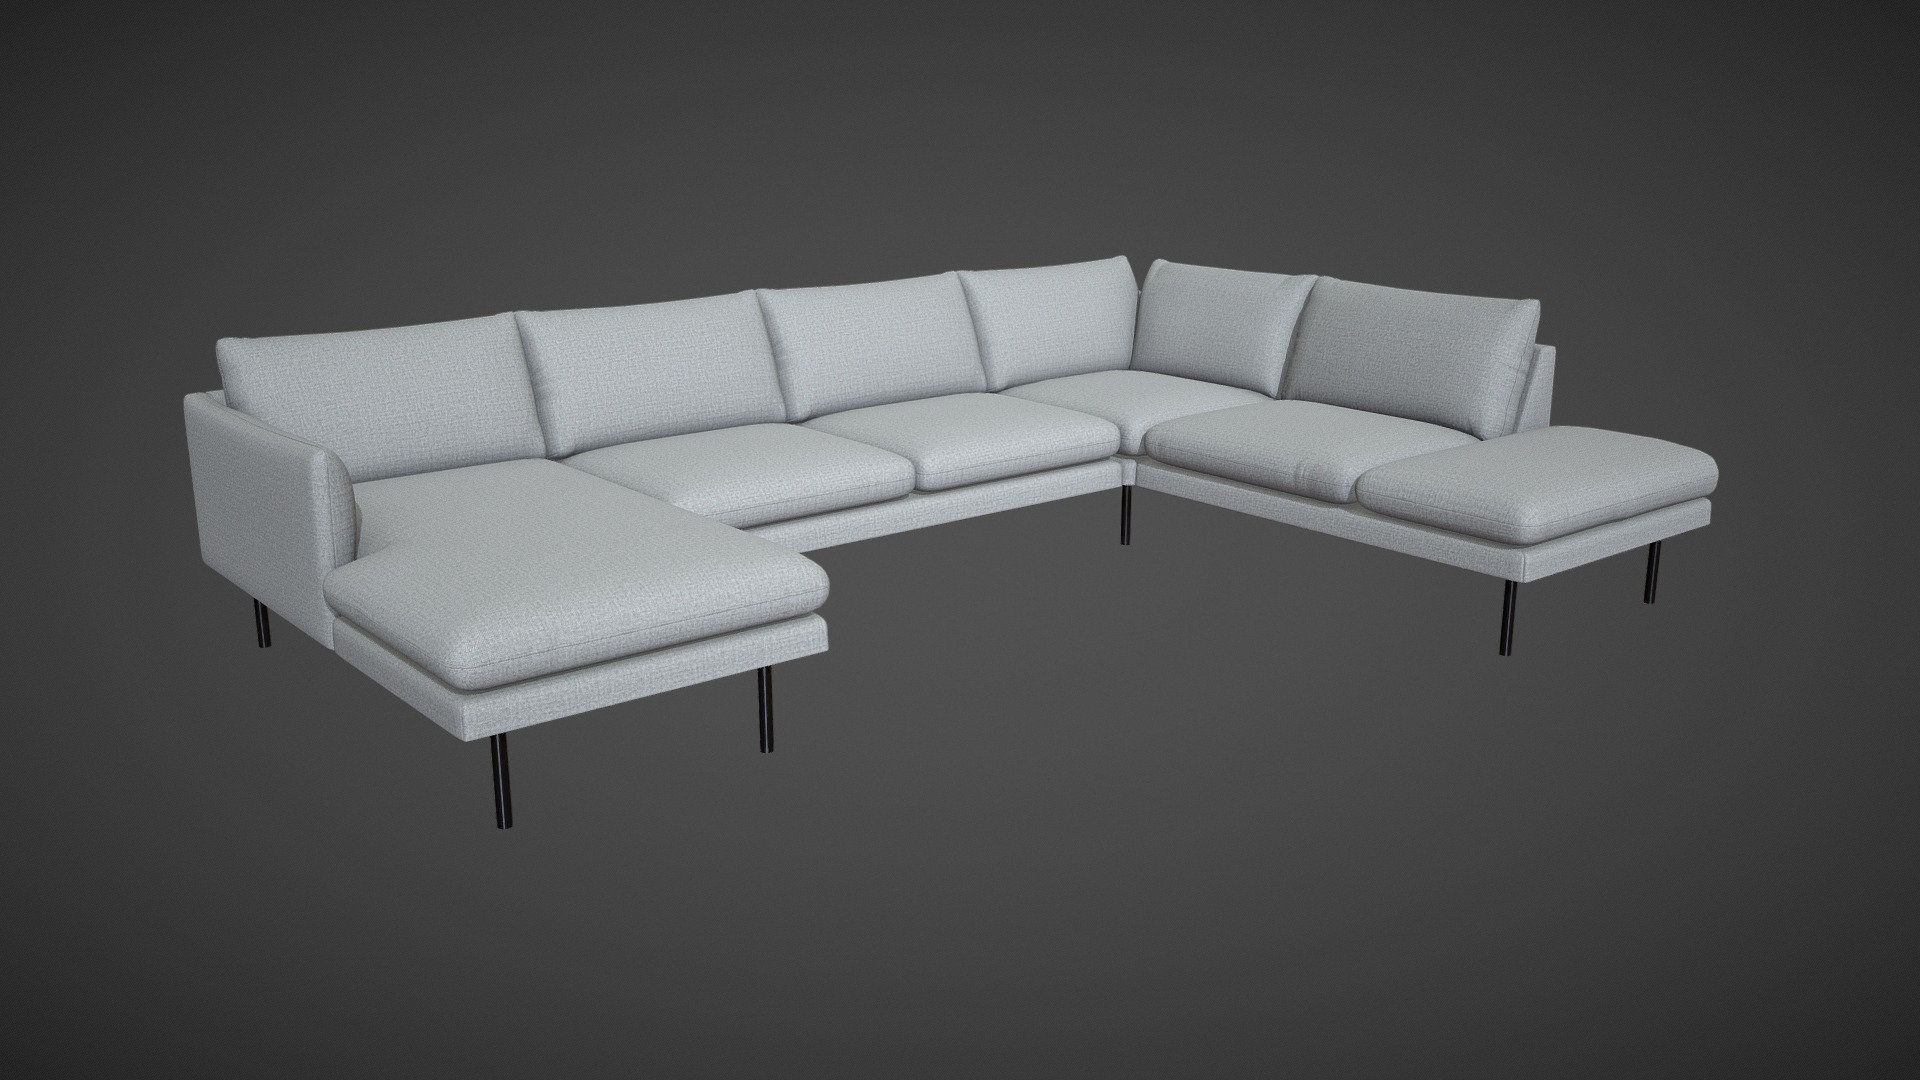 3D model Sofa Mekbuda - This is a 3D model of the Sofa Mekbuda. The 3D model is about a white couch with a grey cushion.